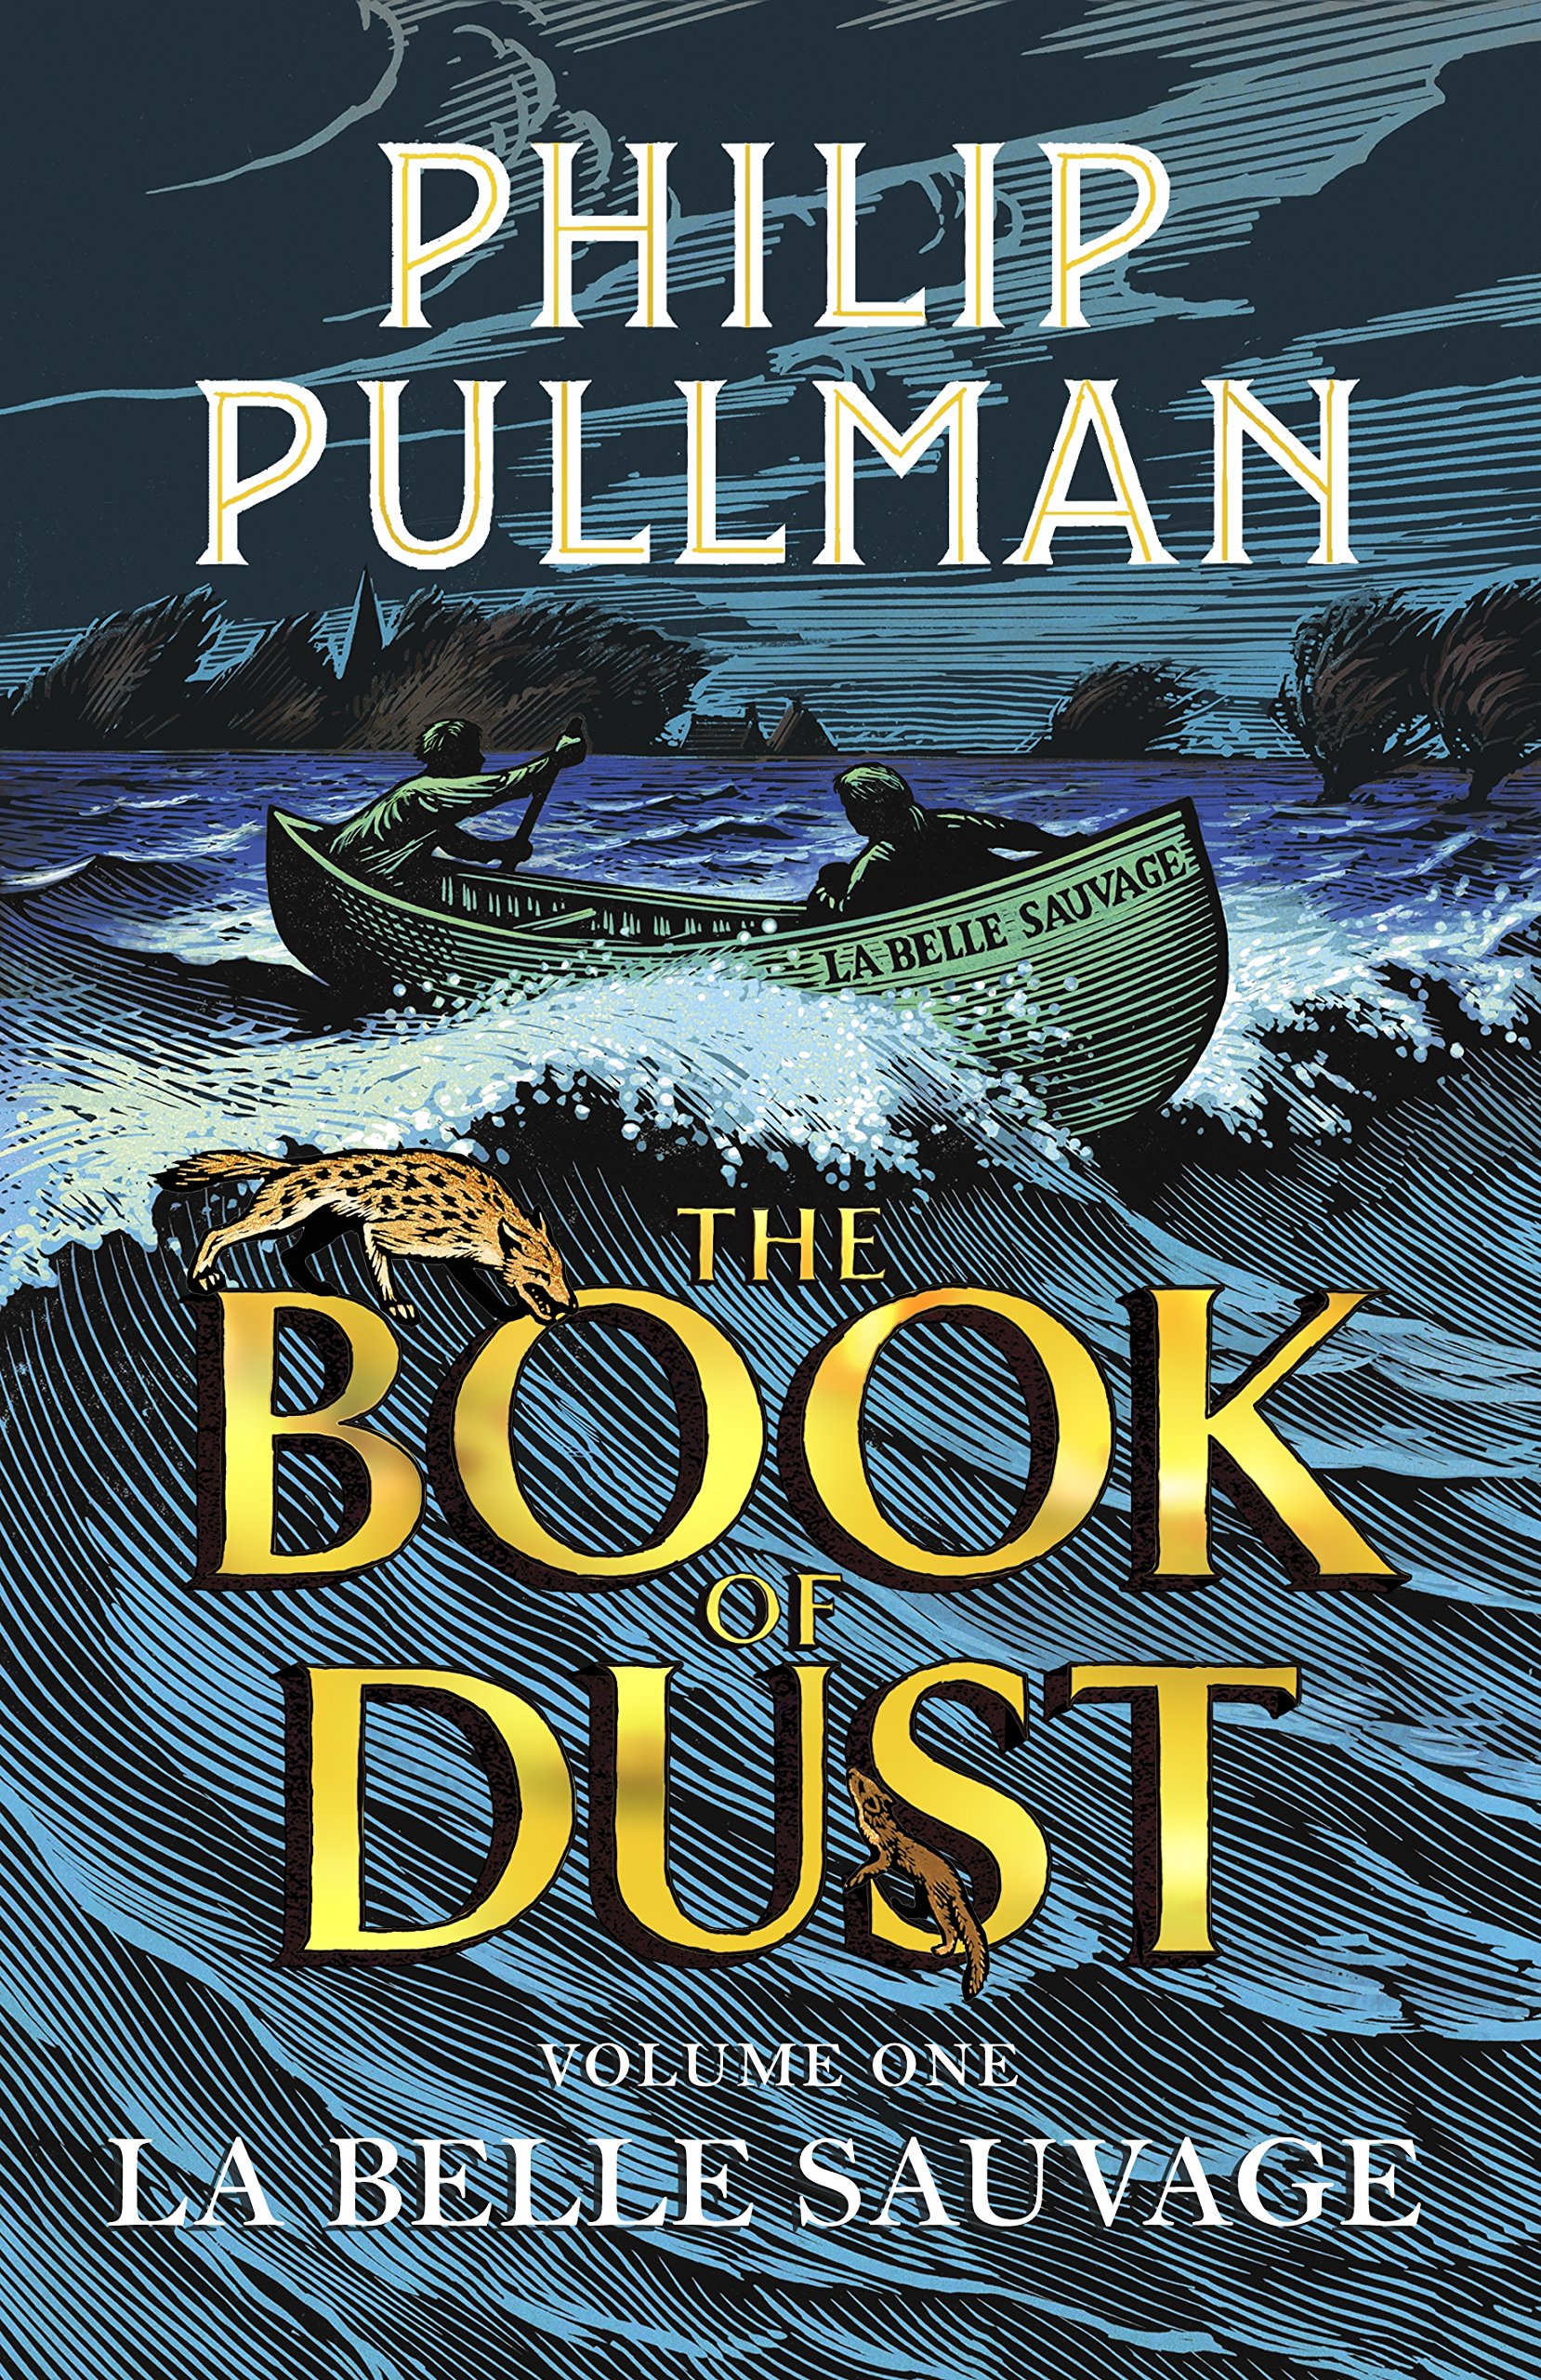 The Book of Dust - La Belle Sauvage Vol. 1 | Philip Pullman